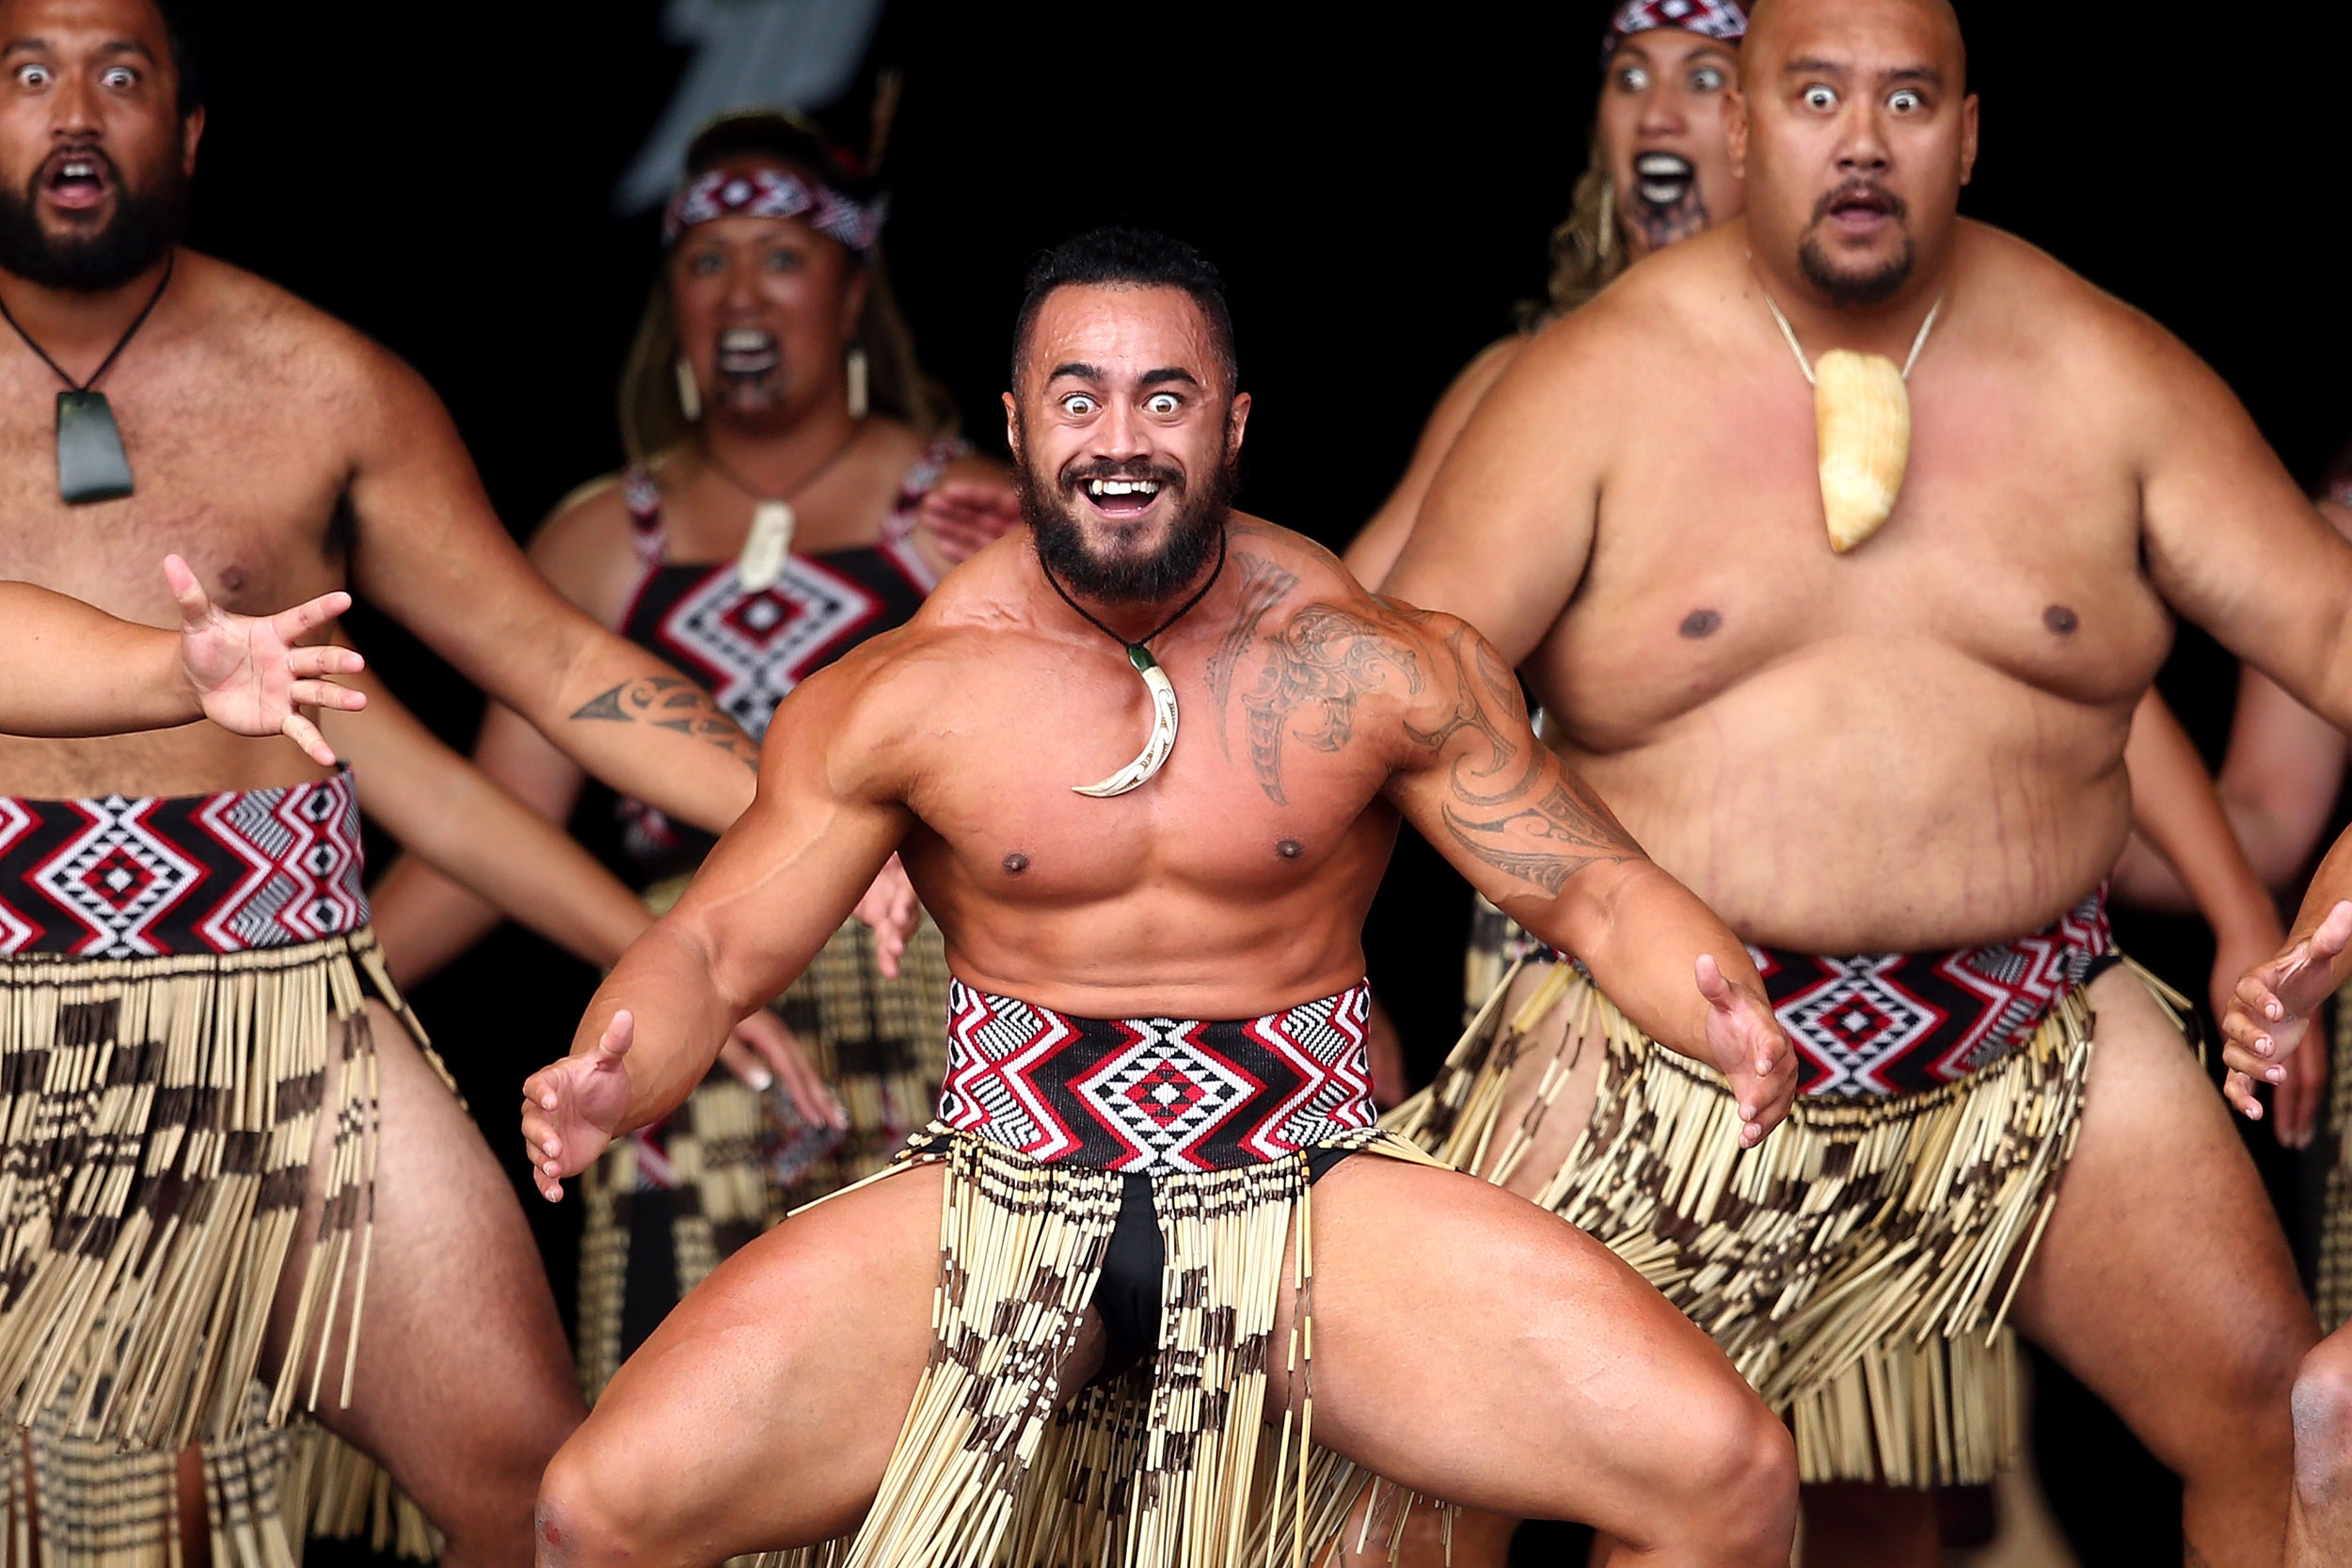 New zealand maori. Маори танец хака. Танец Haka новая Зеландия. Хака танец новой Зеландии. Боевой танец Маори хака.